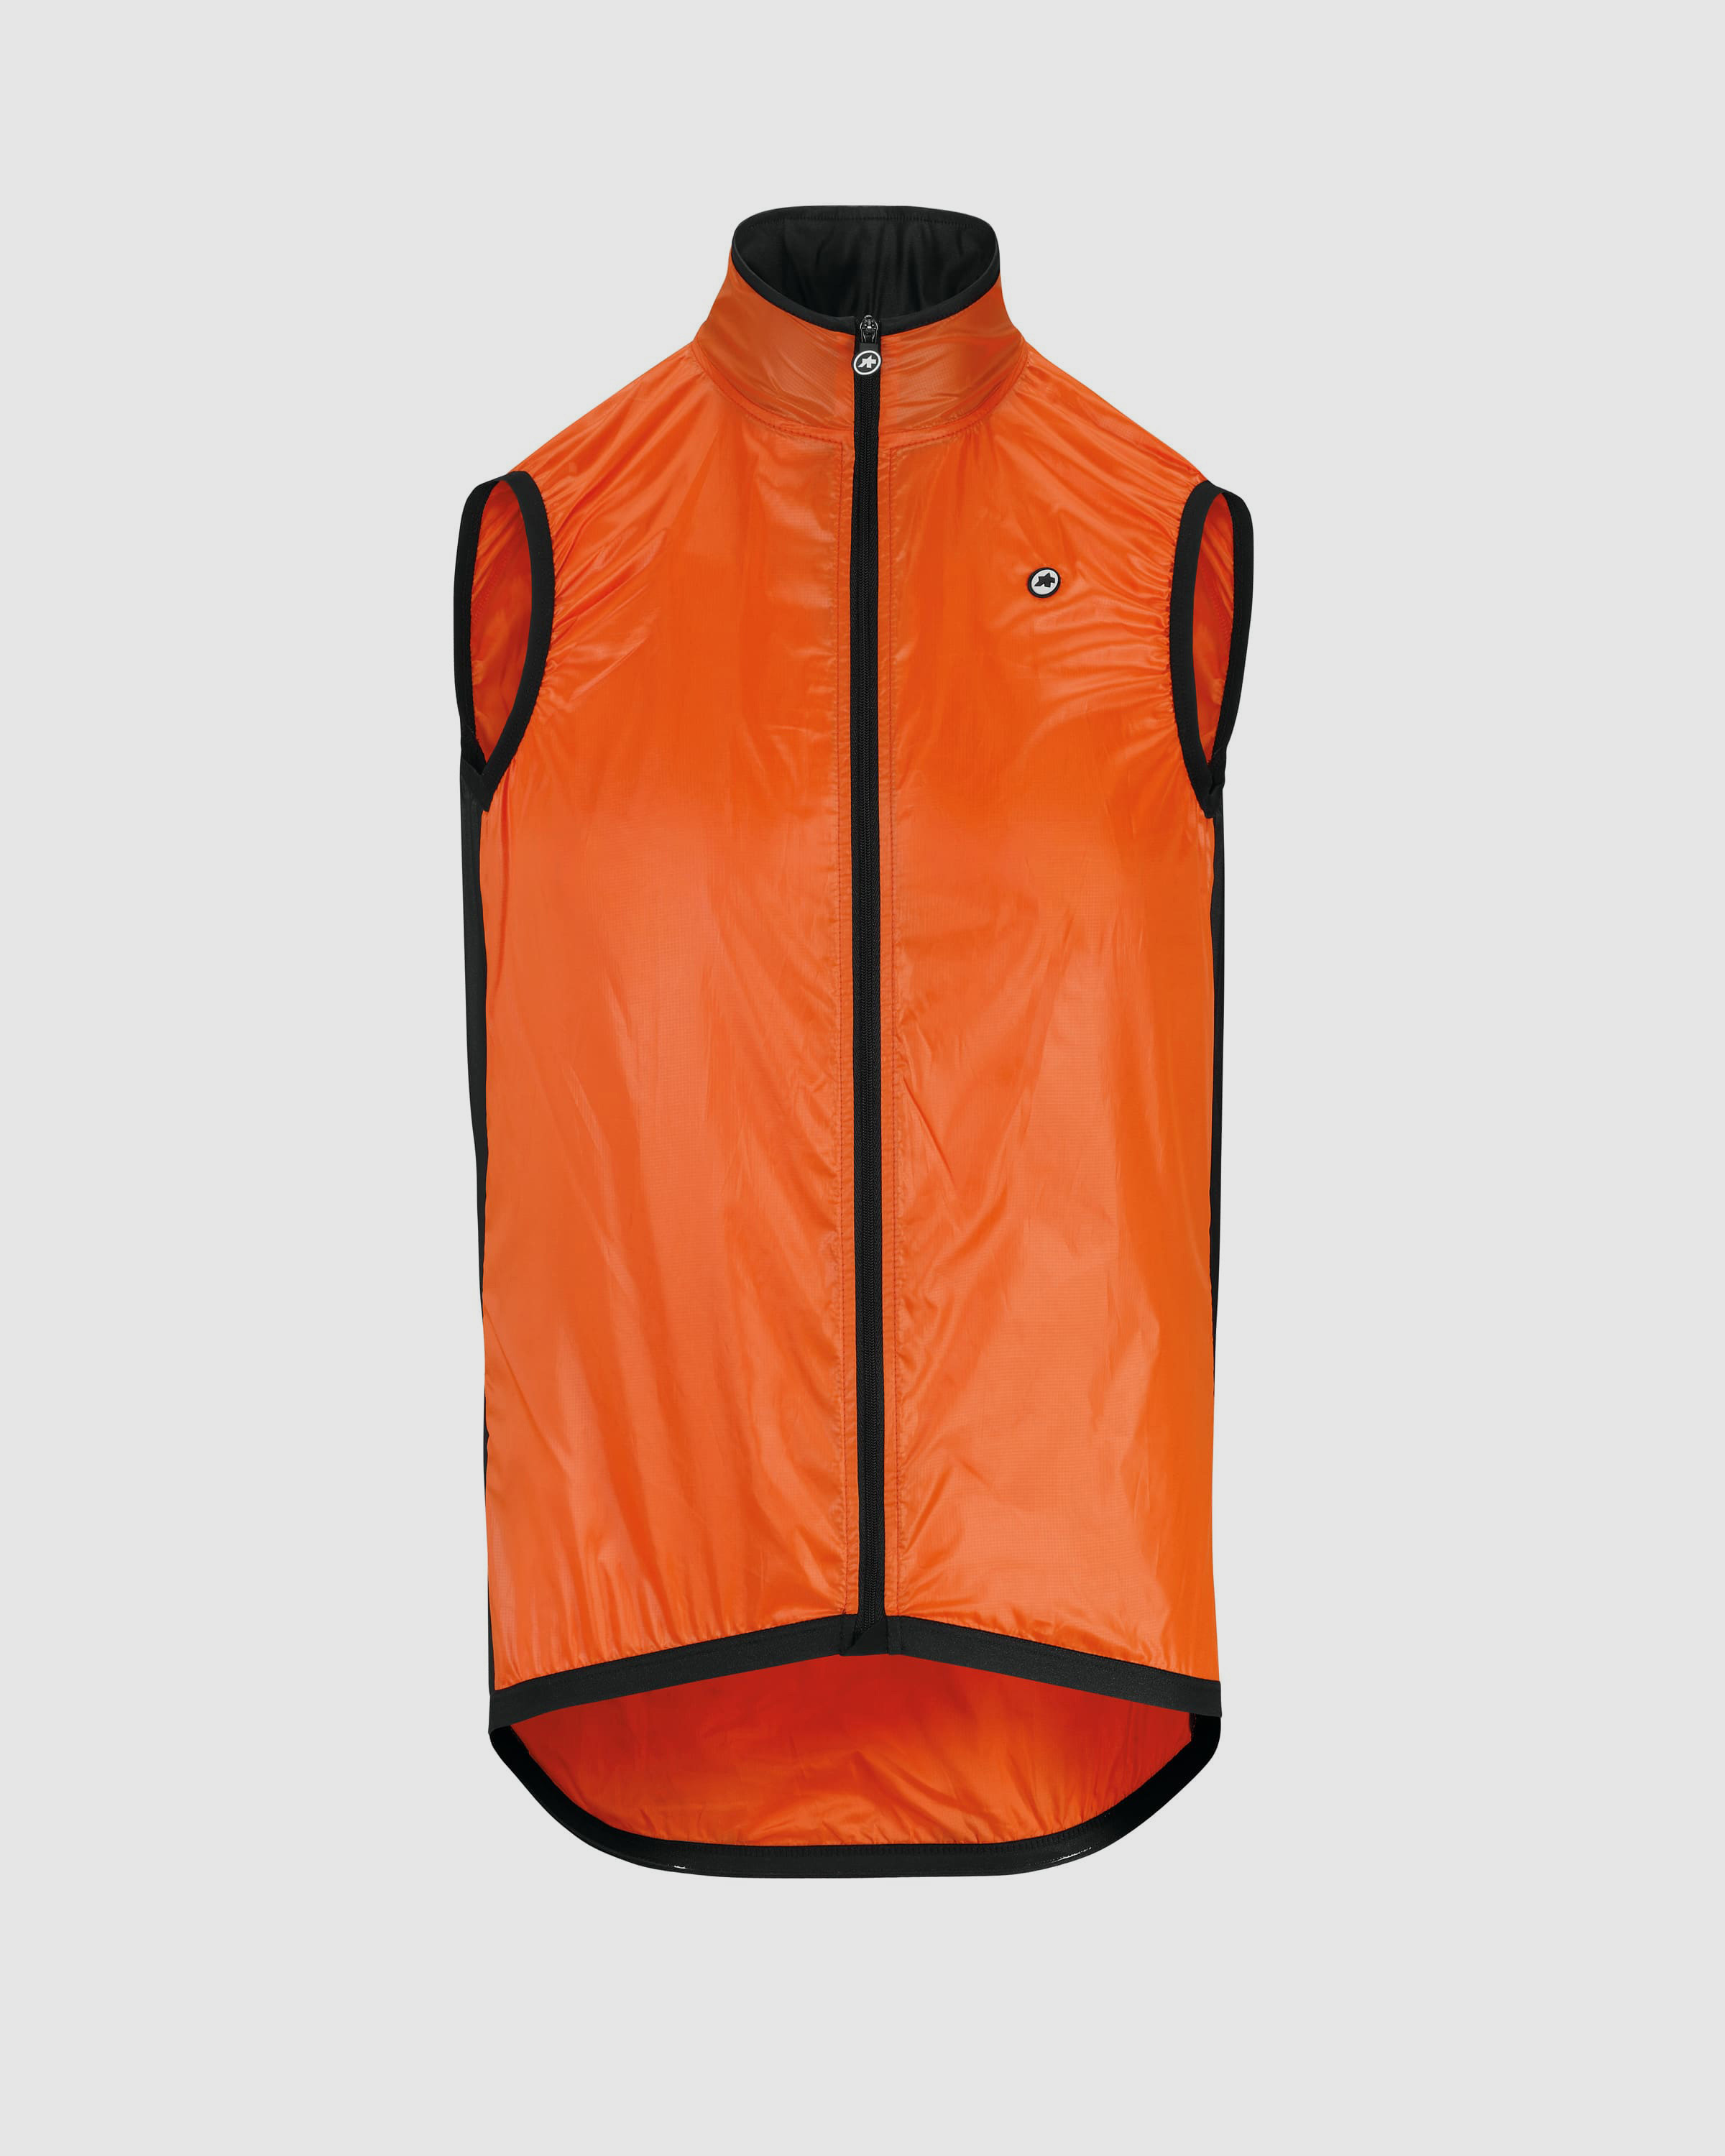 MILLE GT wind vest, lollyRed » ASSOS Of Switzerland